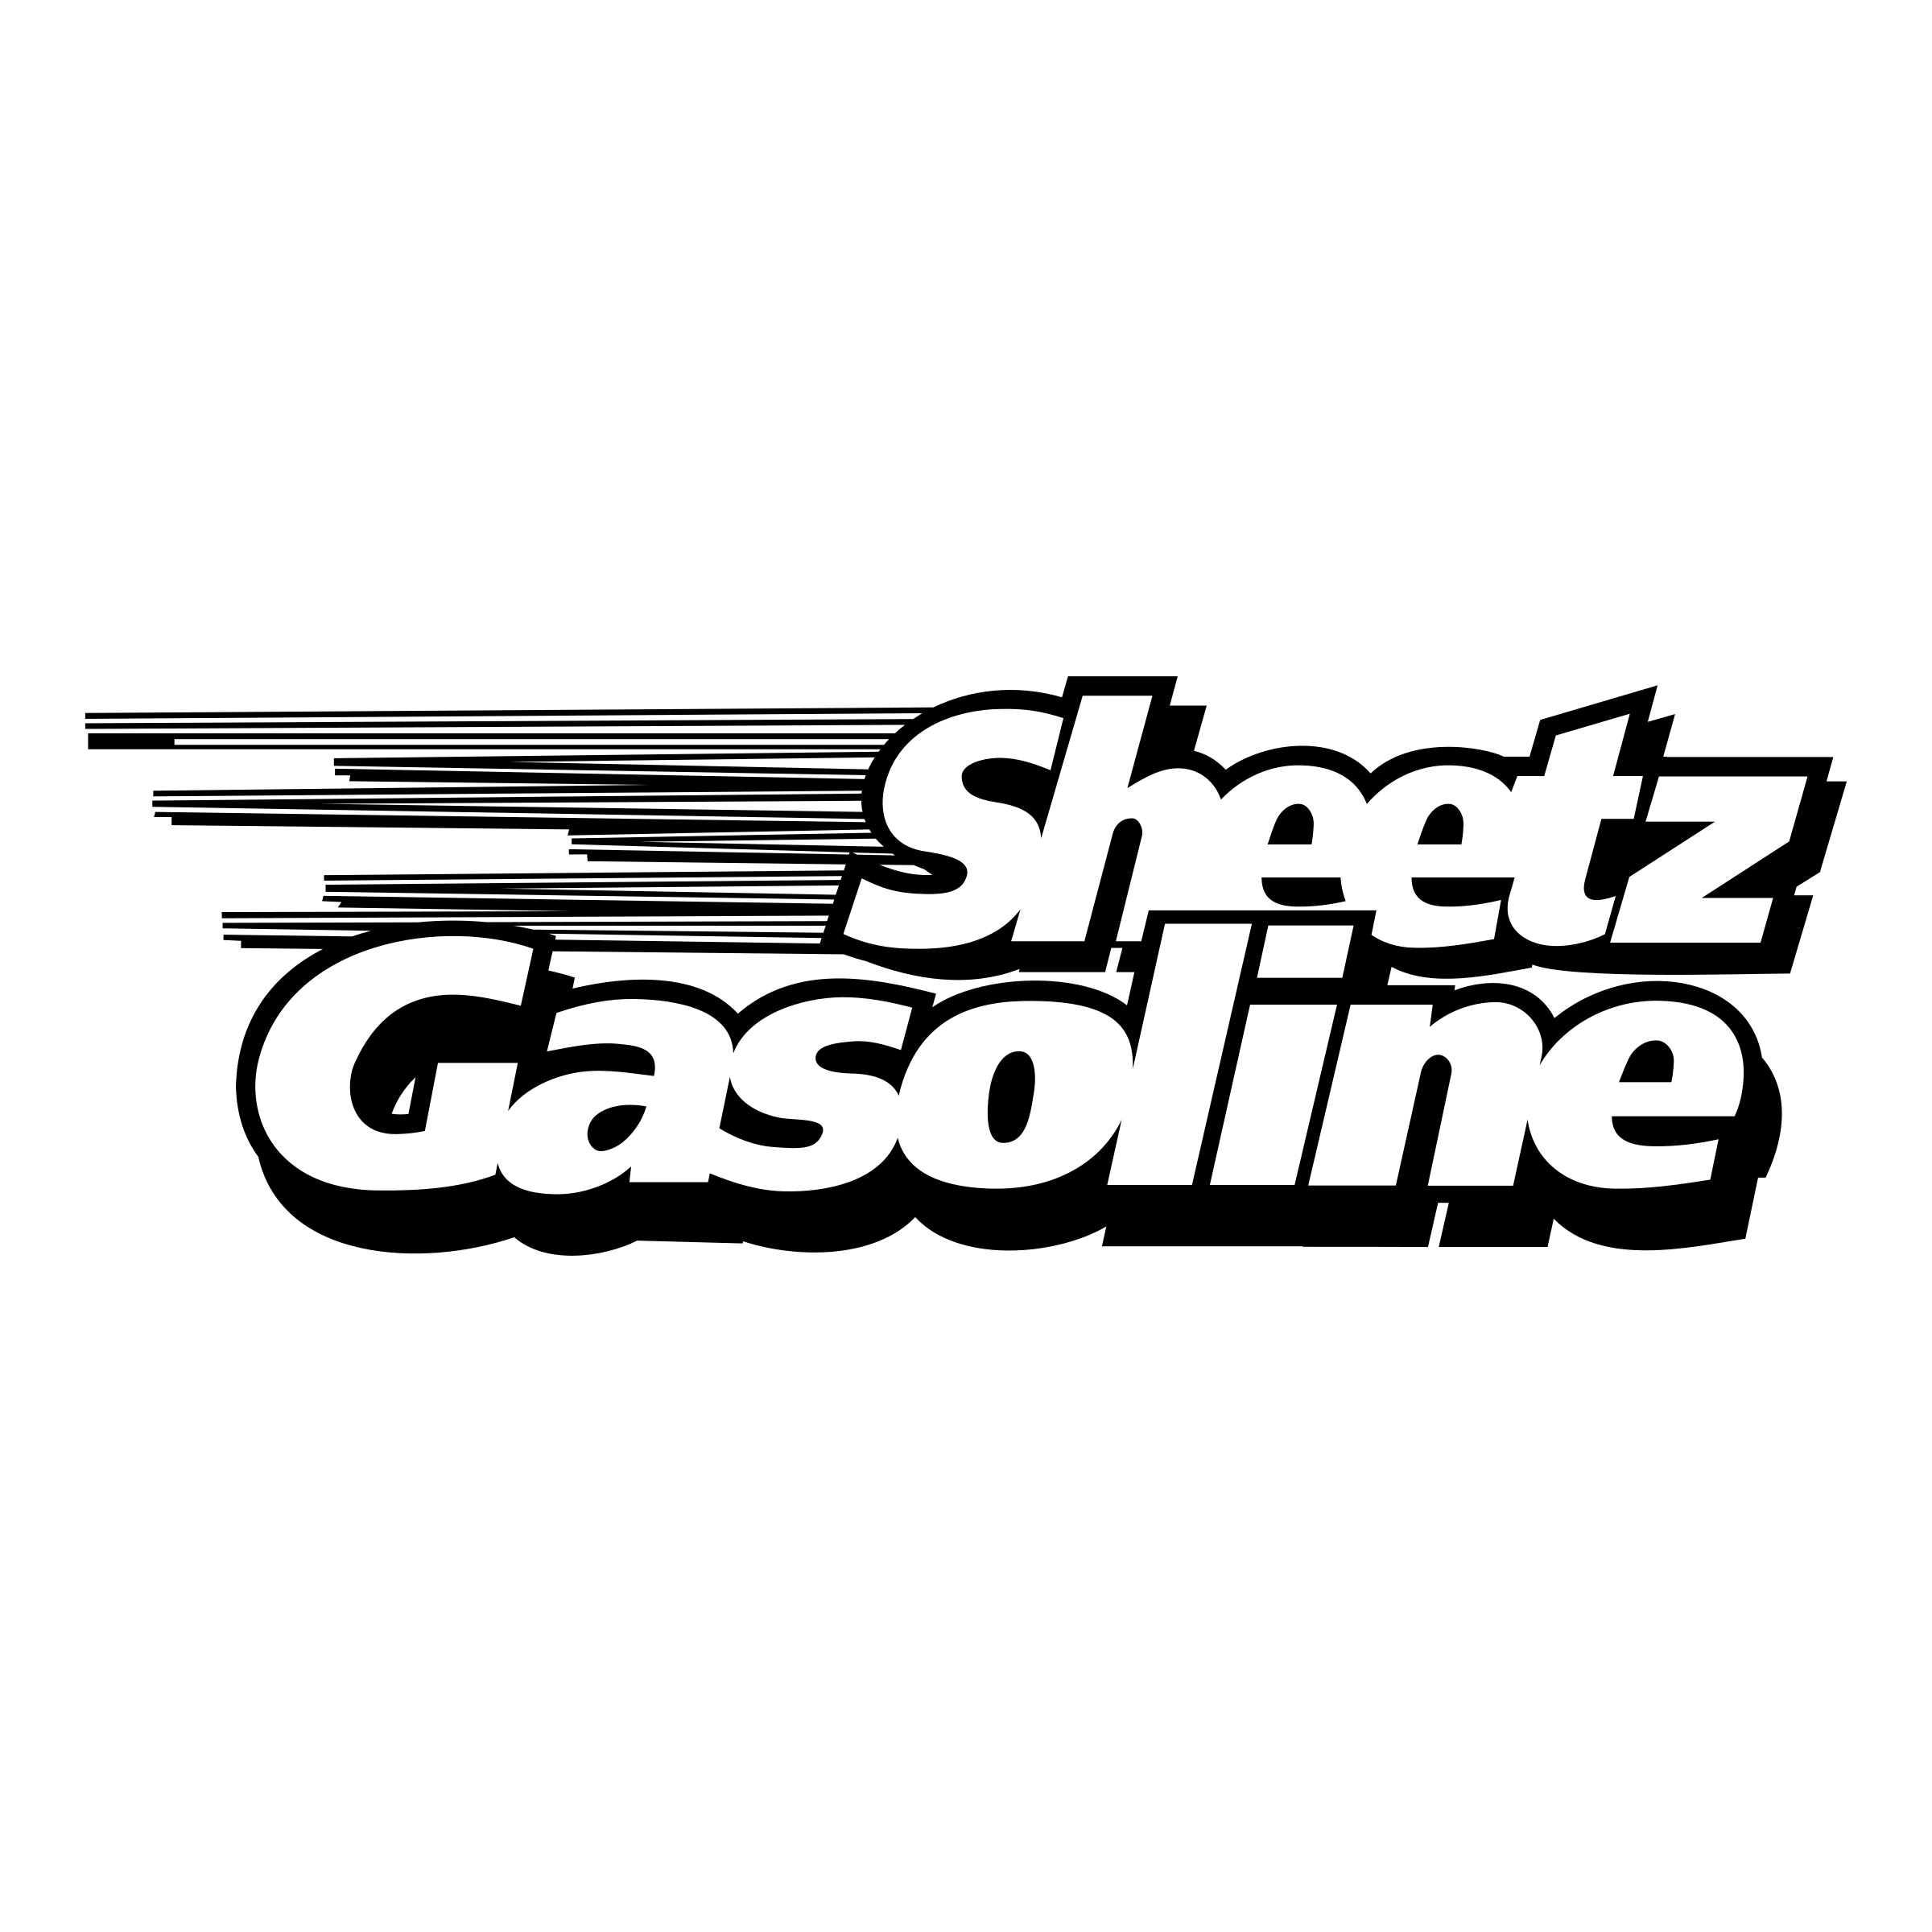 Gasoline Logo - Sheetz Gasoline Logo PNG Transparent & SVG Vector - Freebie Supply